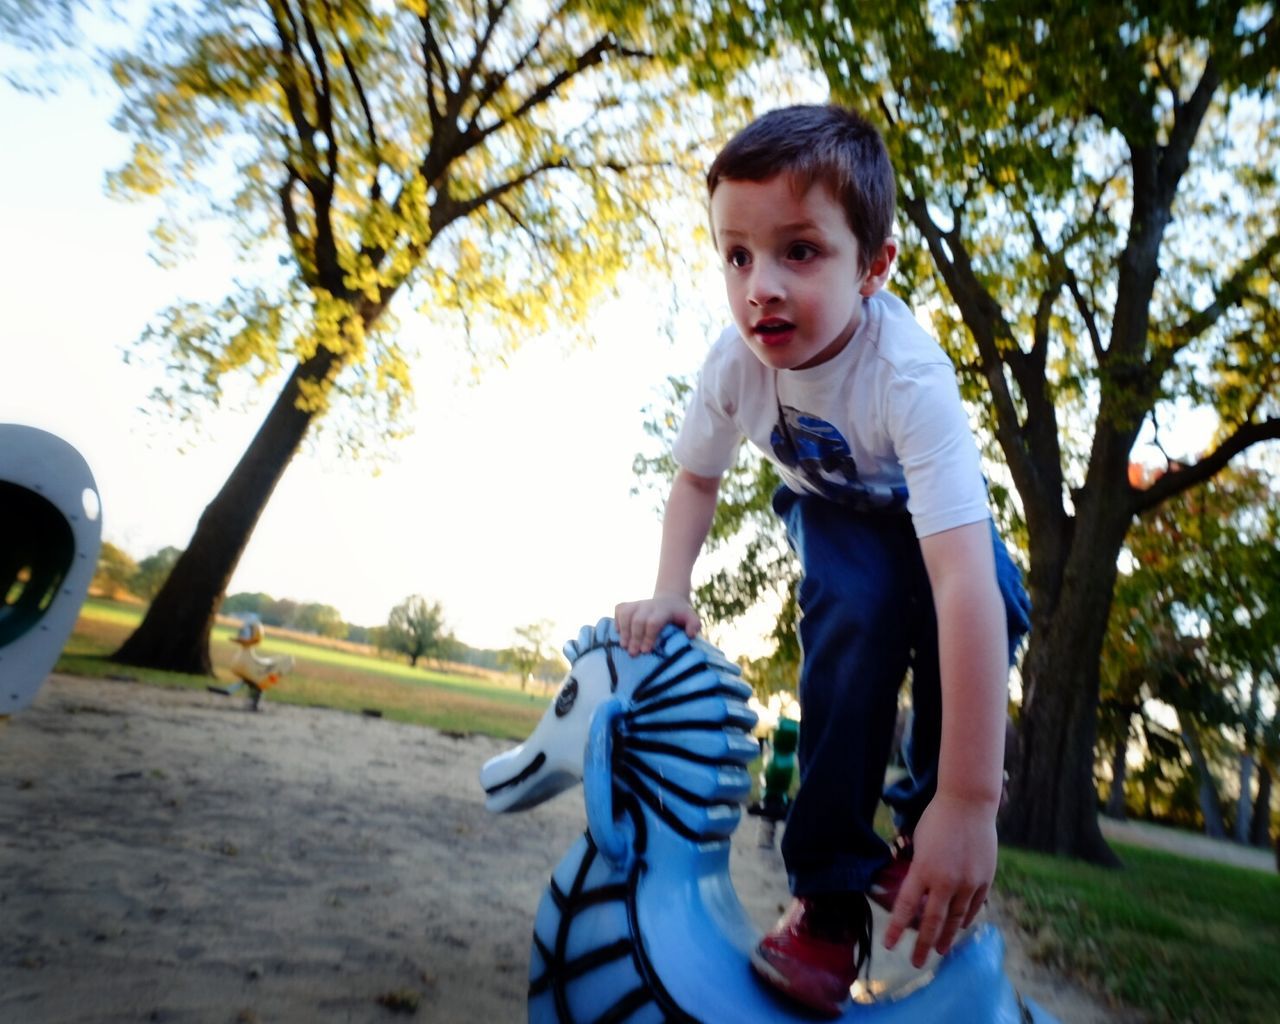 Full length of boy on rocking horse in park